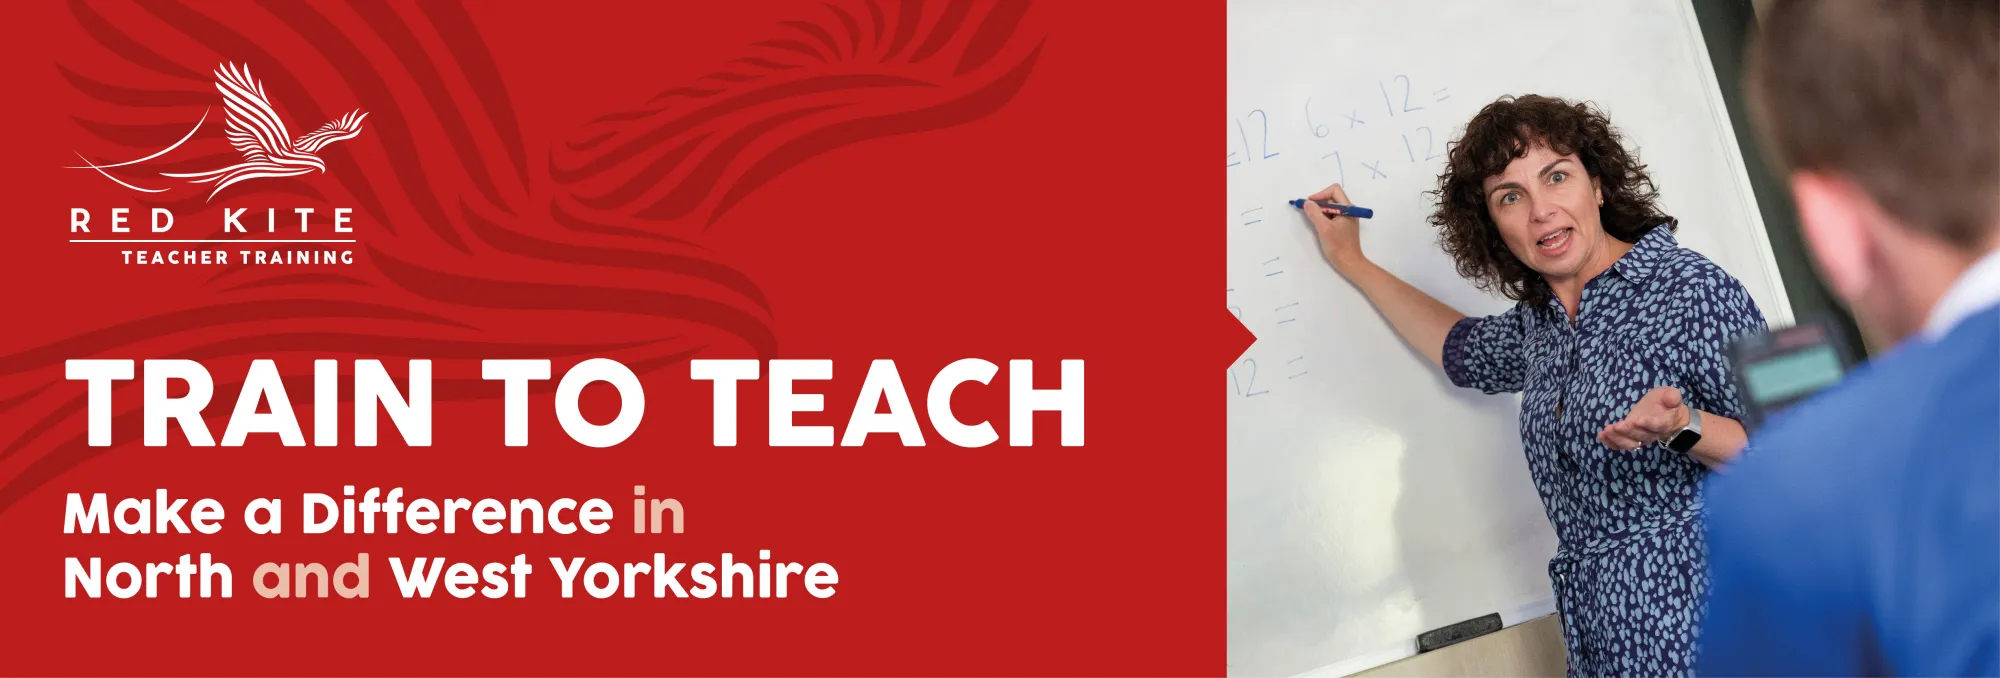 Red Kite Teacher Training banner - Train to Teach